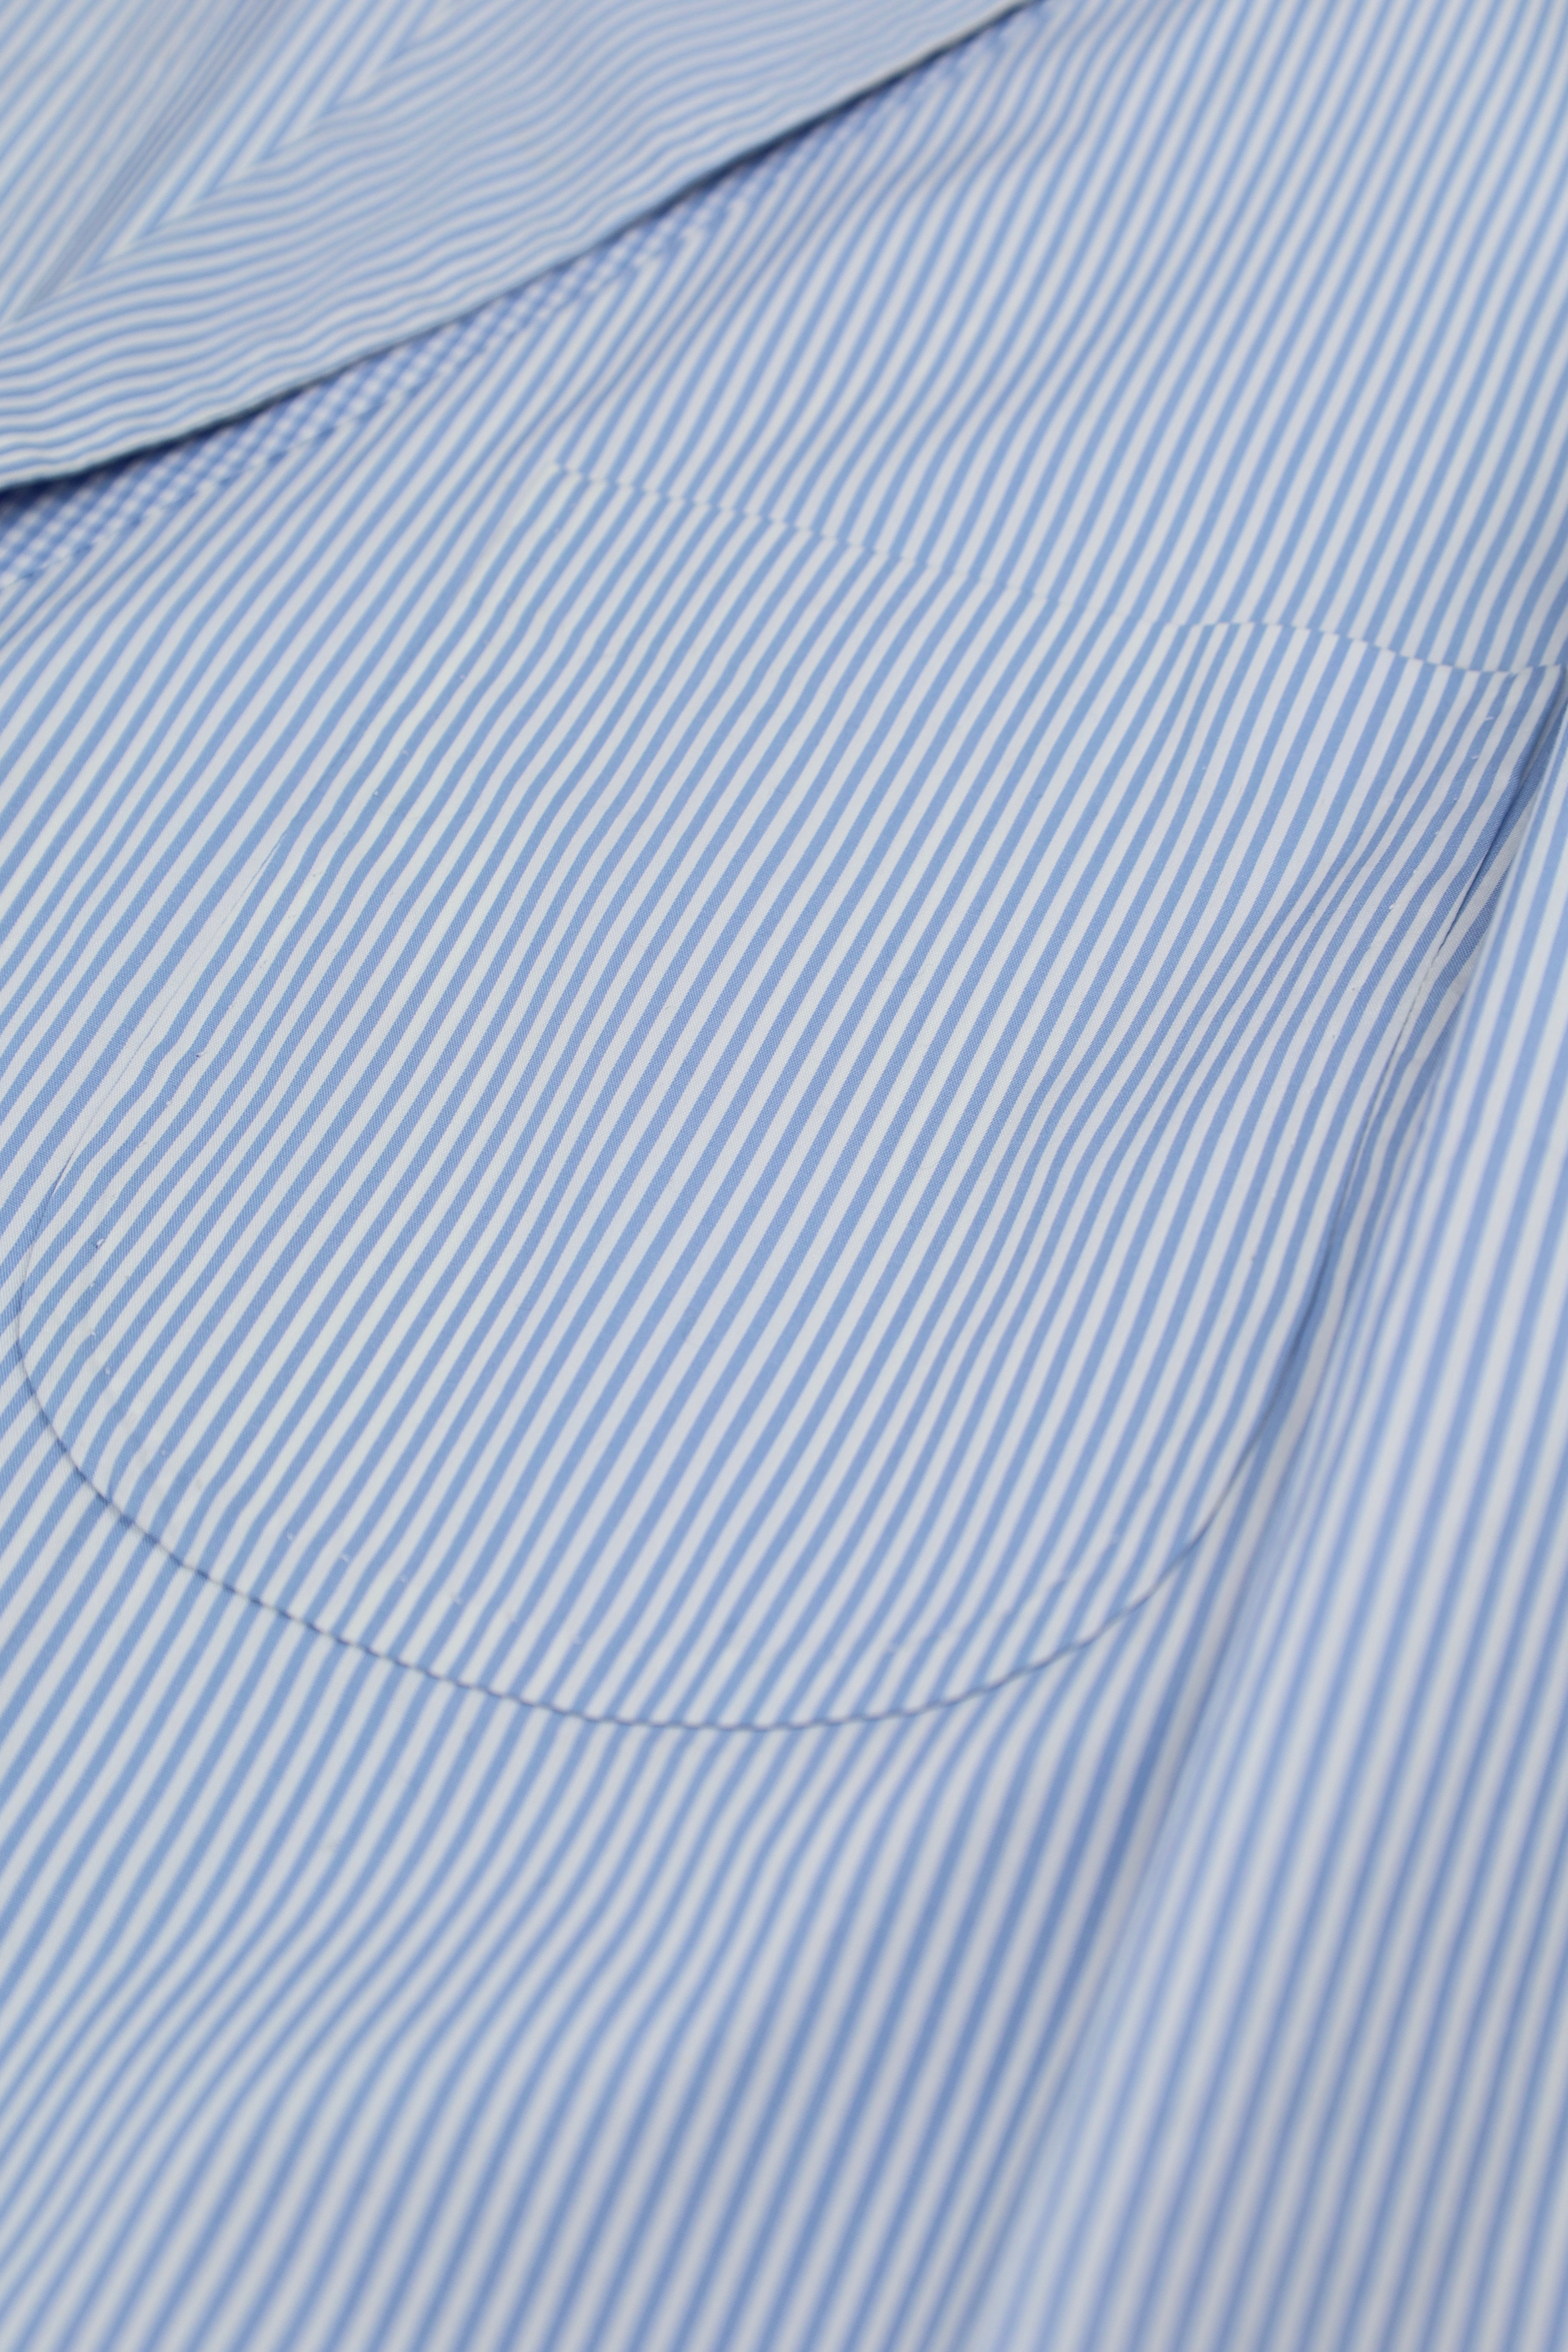 Sartoria Chiaia Napoli Light Blue Stripe Unconstructed Jacket